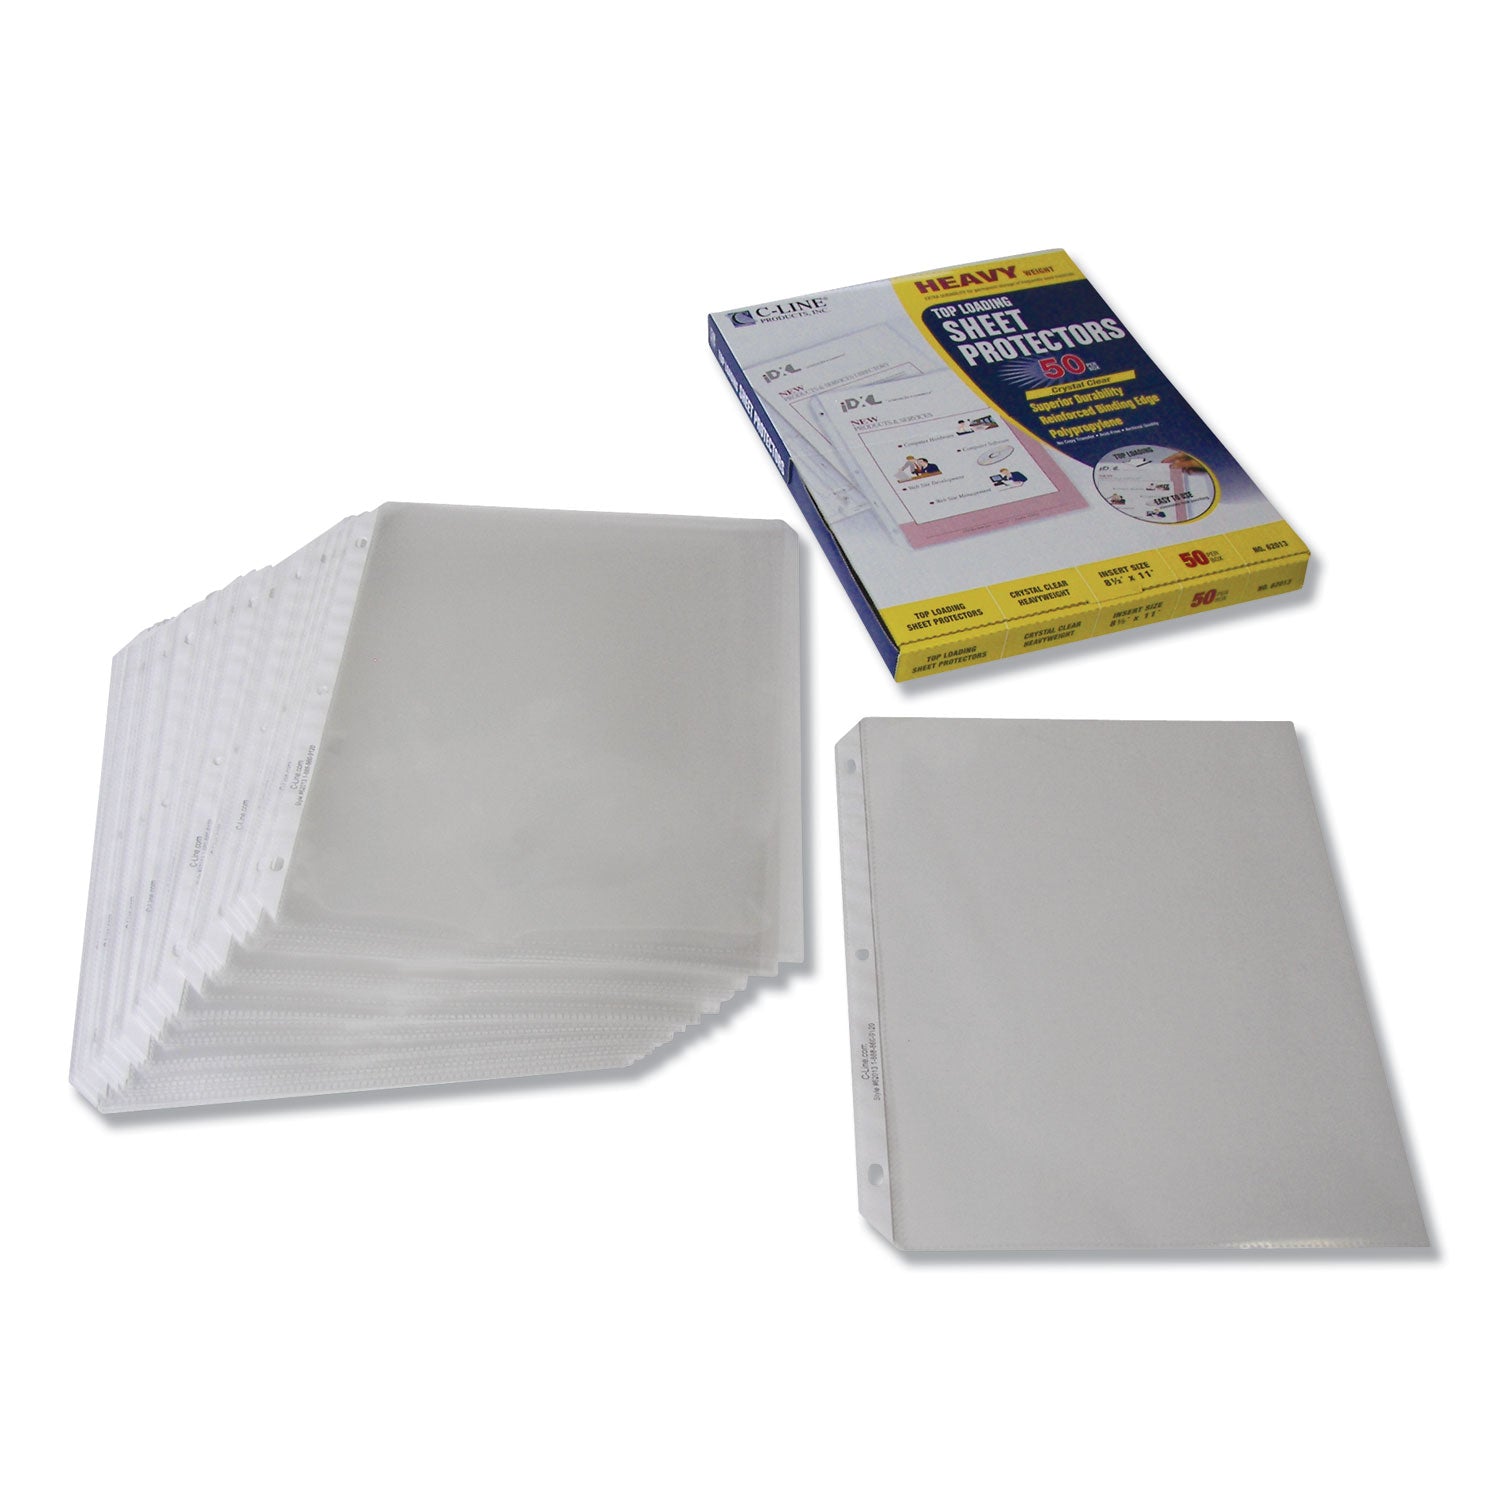 heavyweight-polypropylene-sheet-protectors-clear-2-11-x-85-50-box_cli62013 - 3